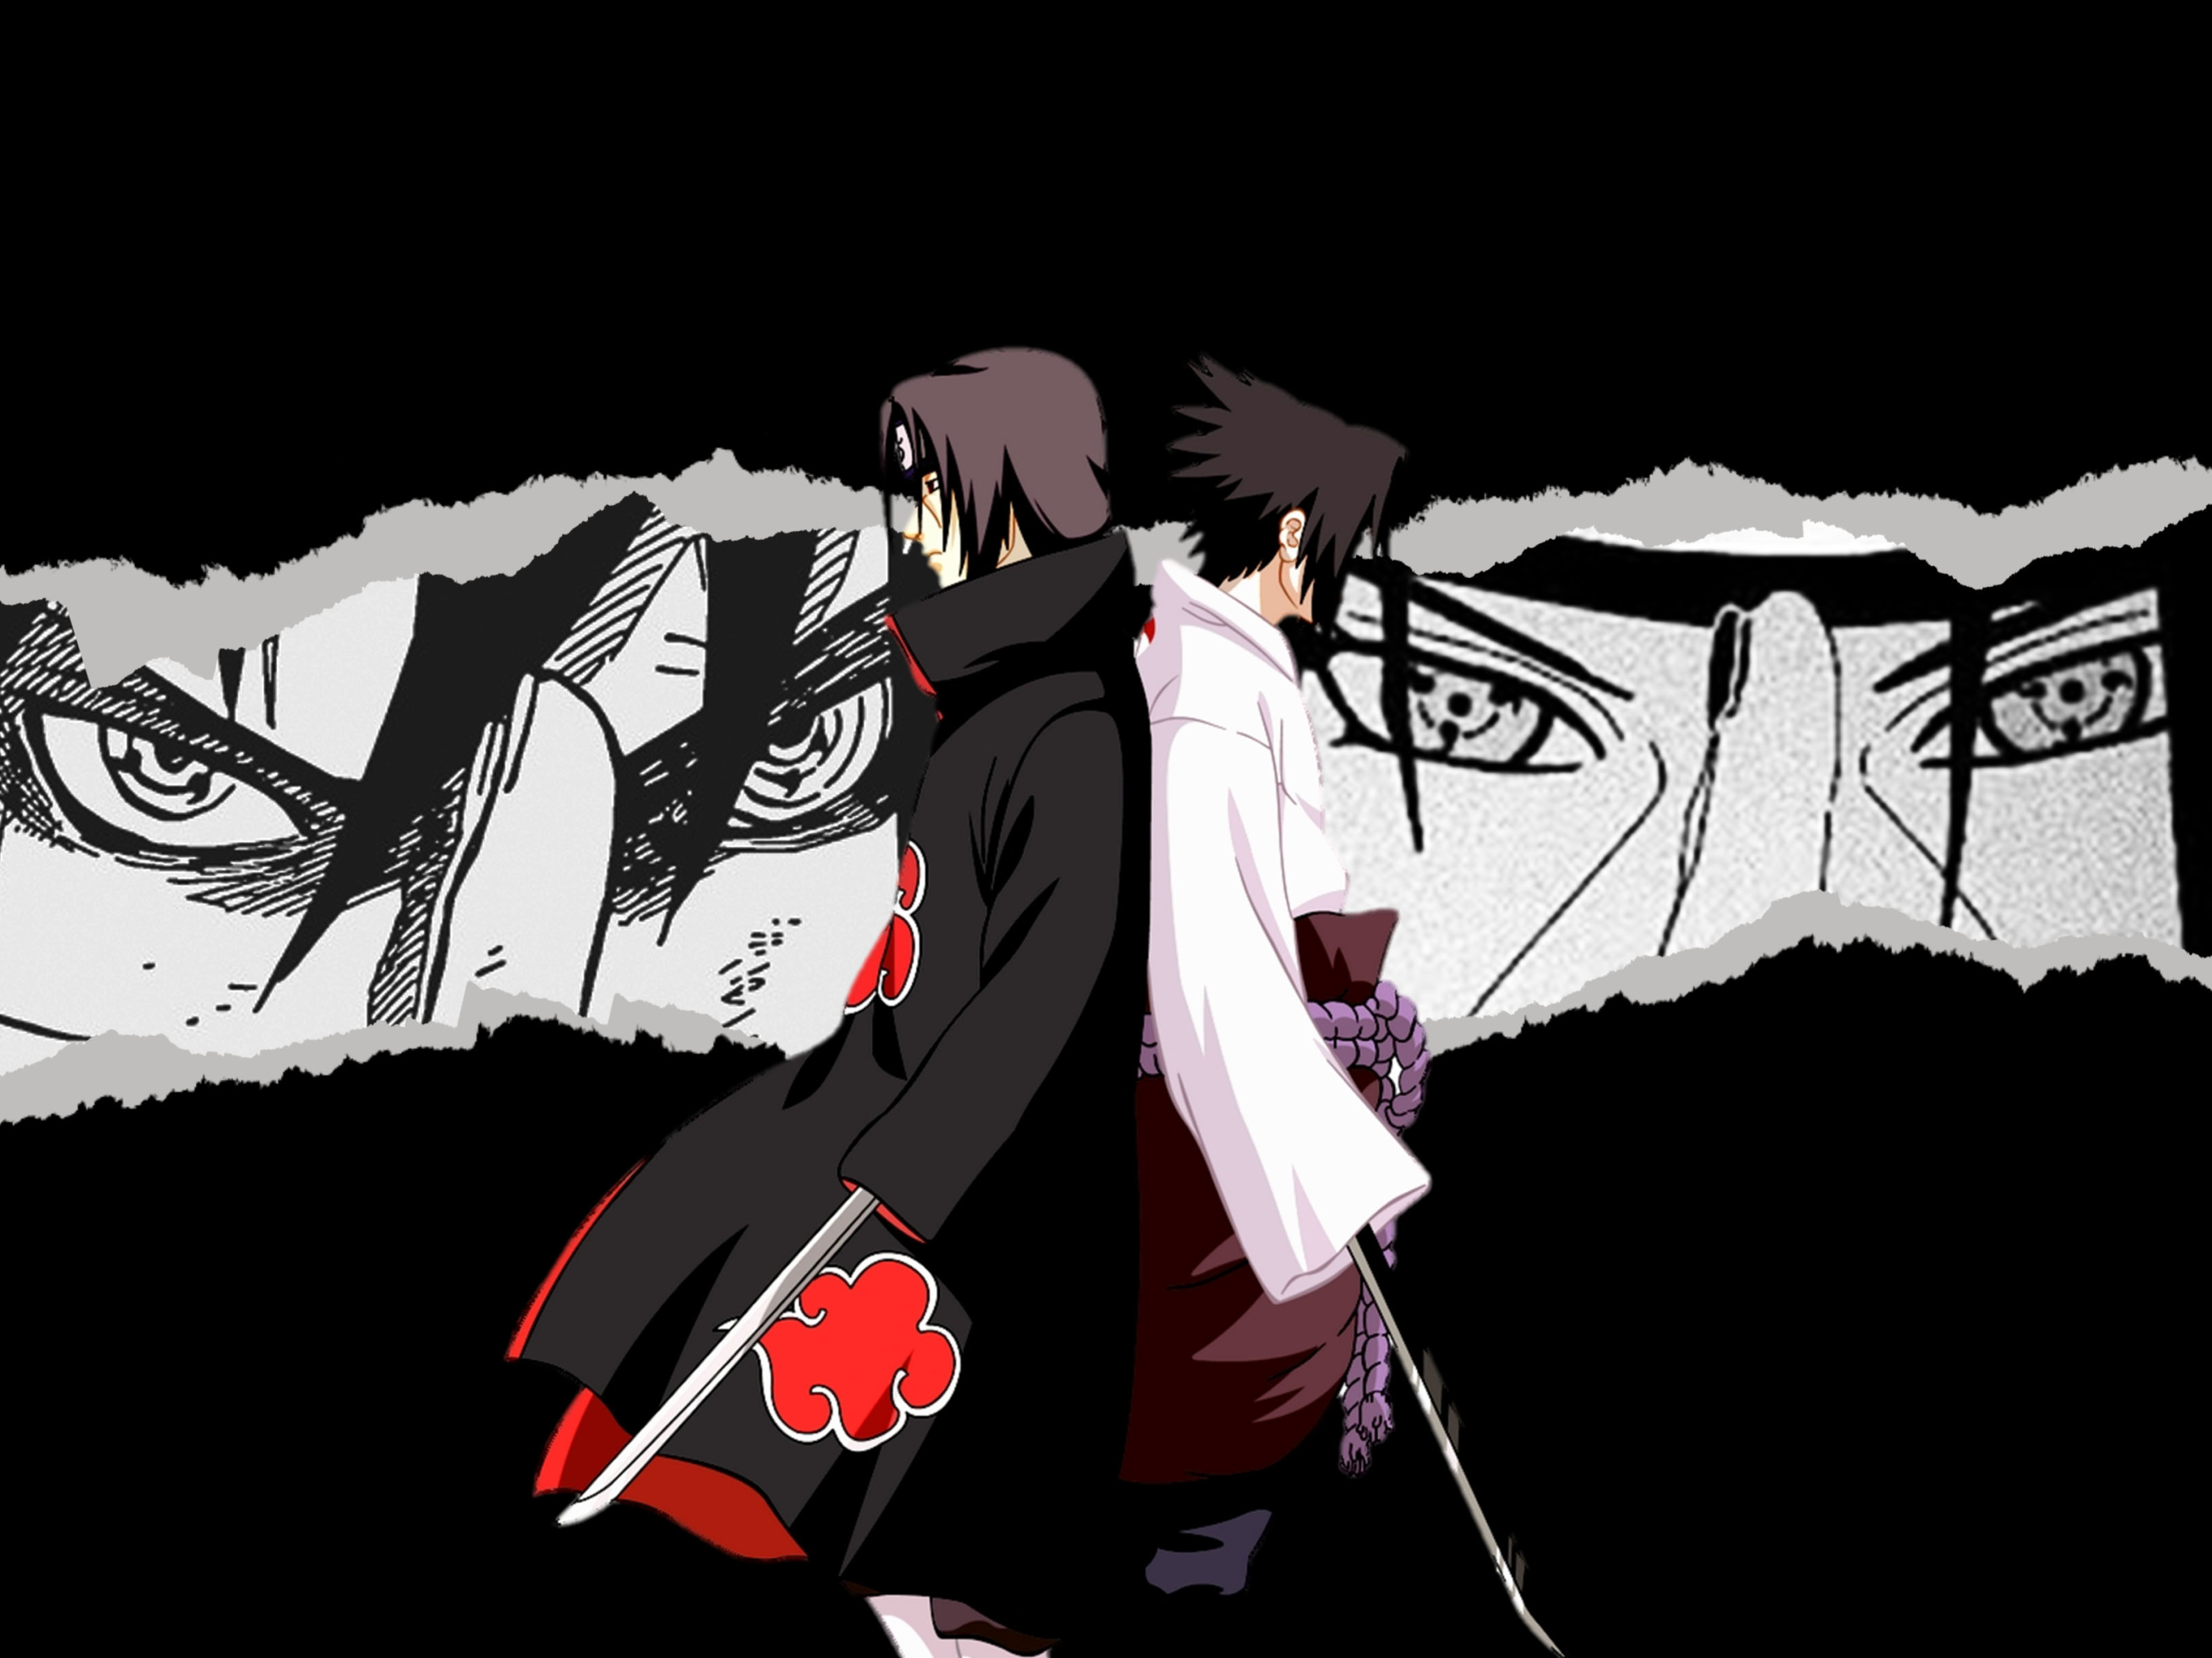 2732x2048 Itachi vs Sasuke 4K Naruto 2732x2048 Resolution Wallpaper, HD  Anime 4K Wallpapers, Images, Photos and Background - Wallpapers Den